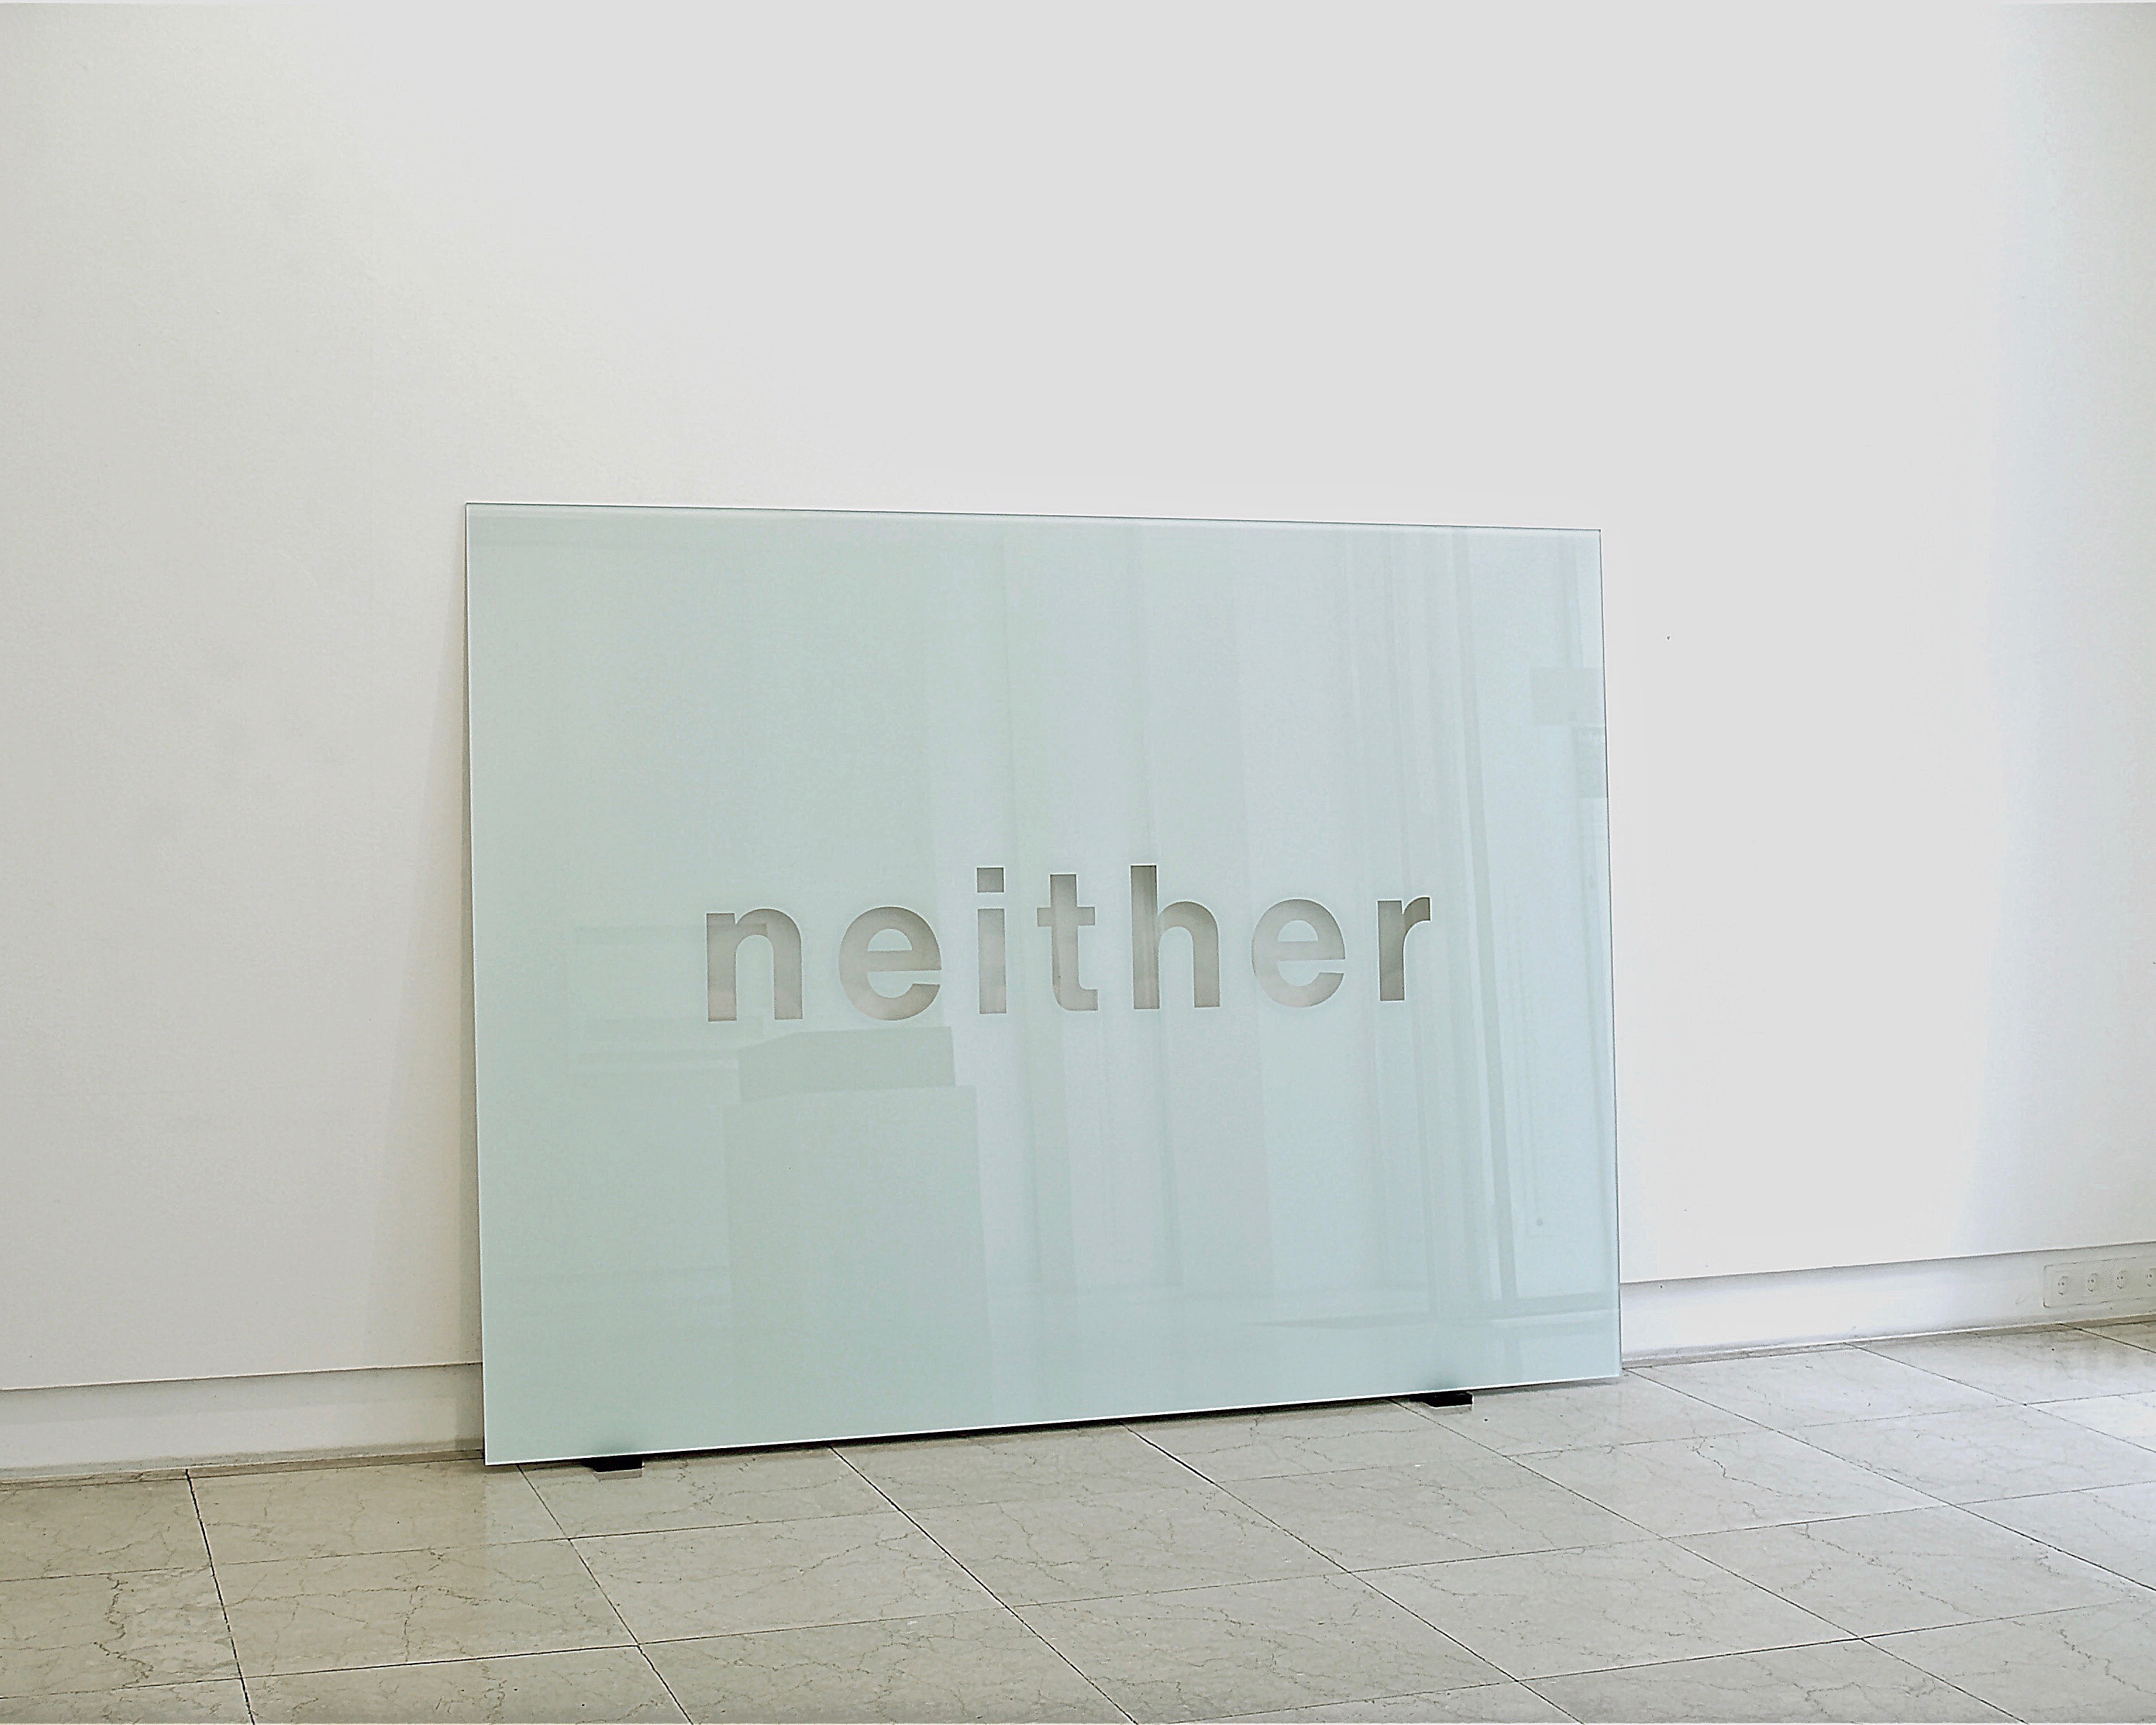 Neither<br>2005, Hinterglasmalerei / reverse glass painting, 150x200cm